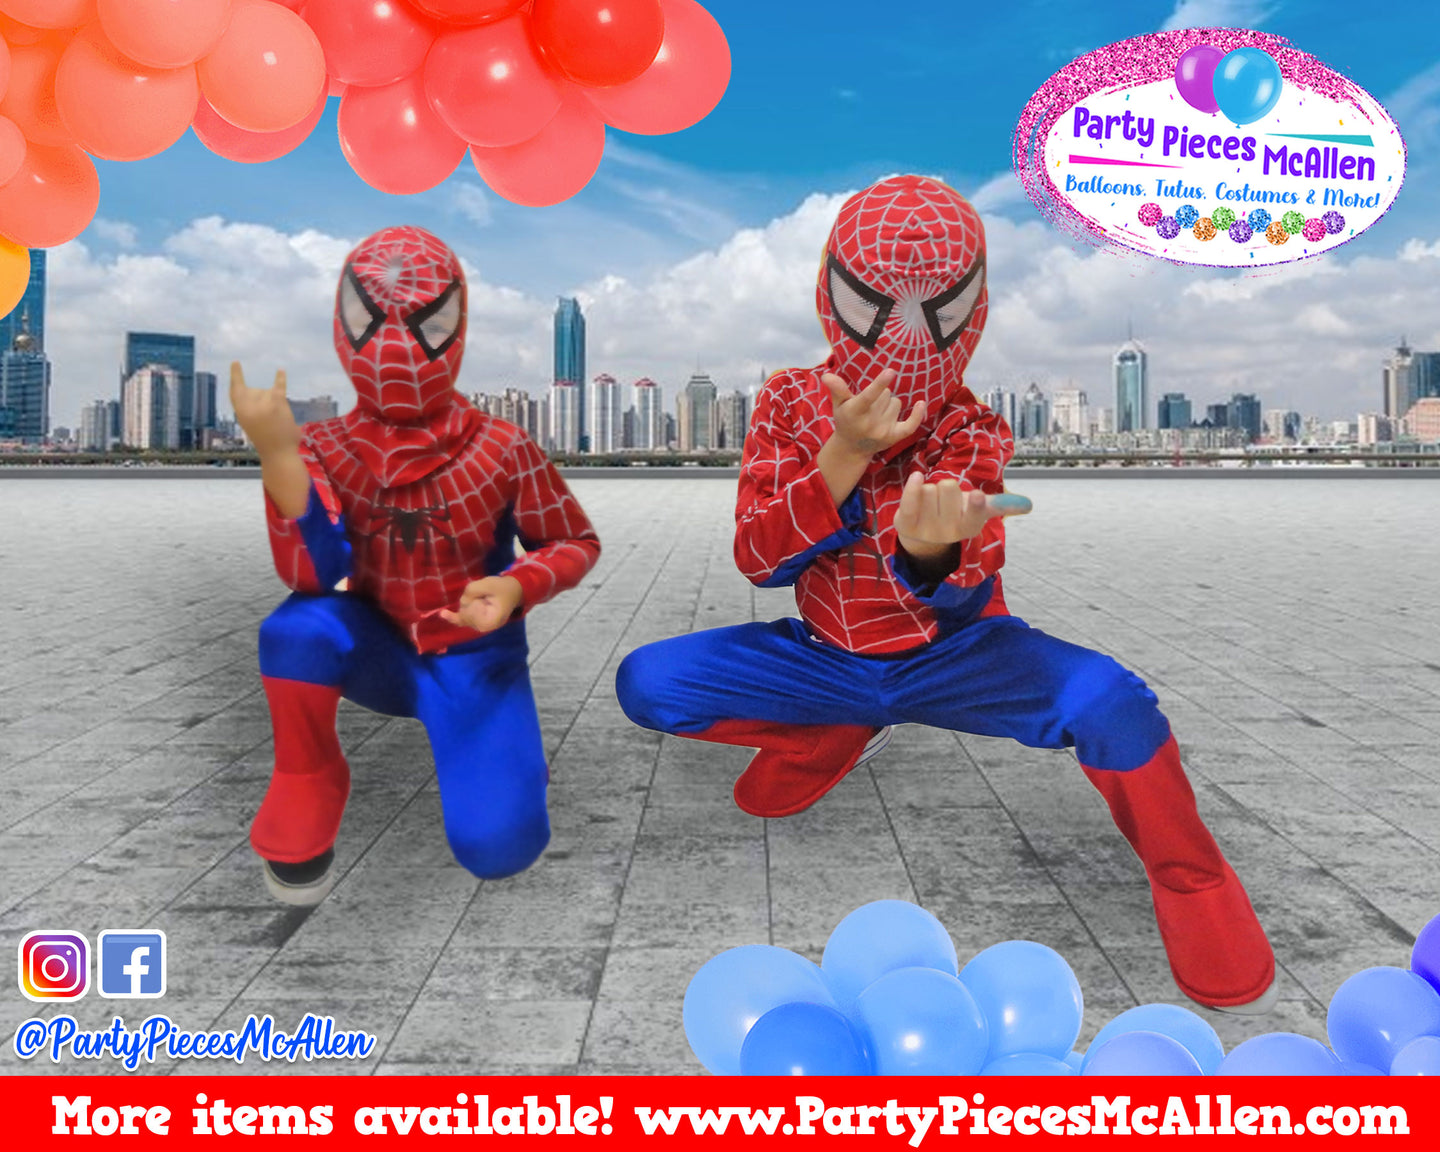 Boys Spider Costume